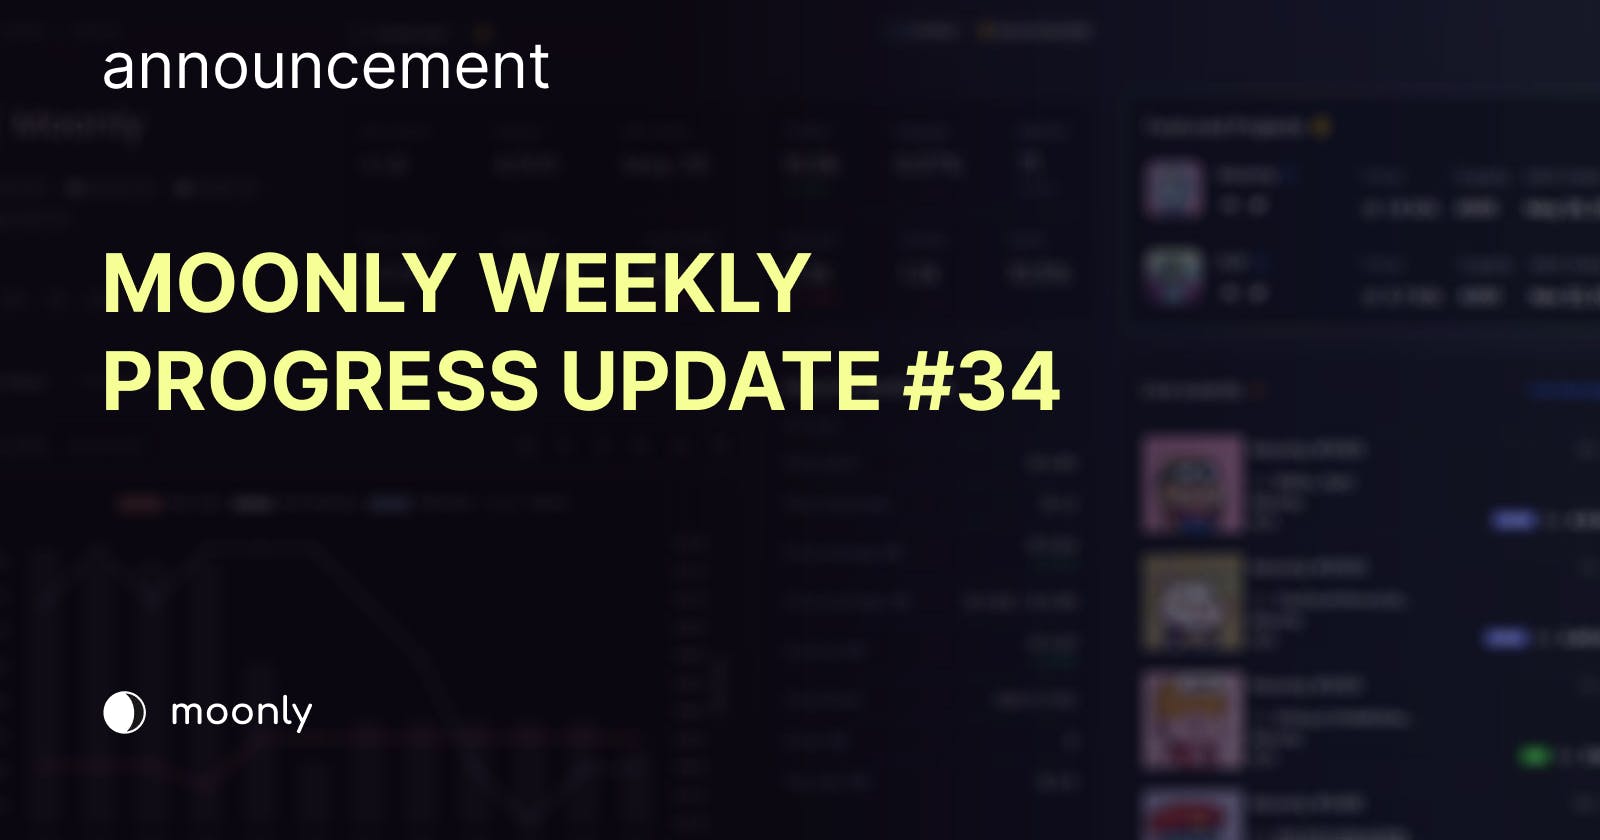 Moonly weekly progress update #34